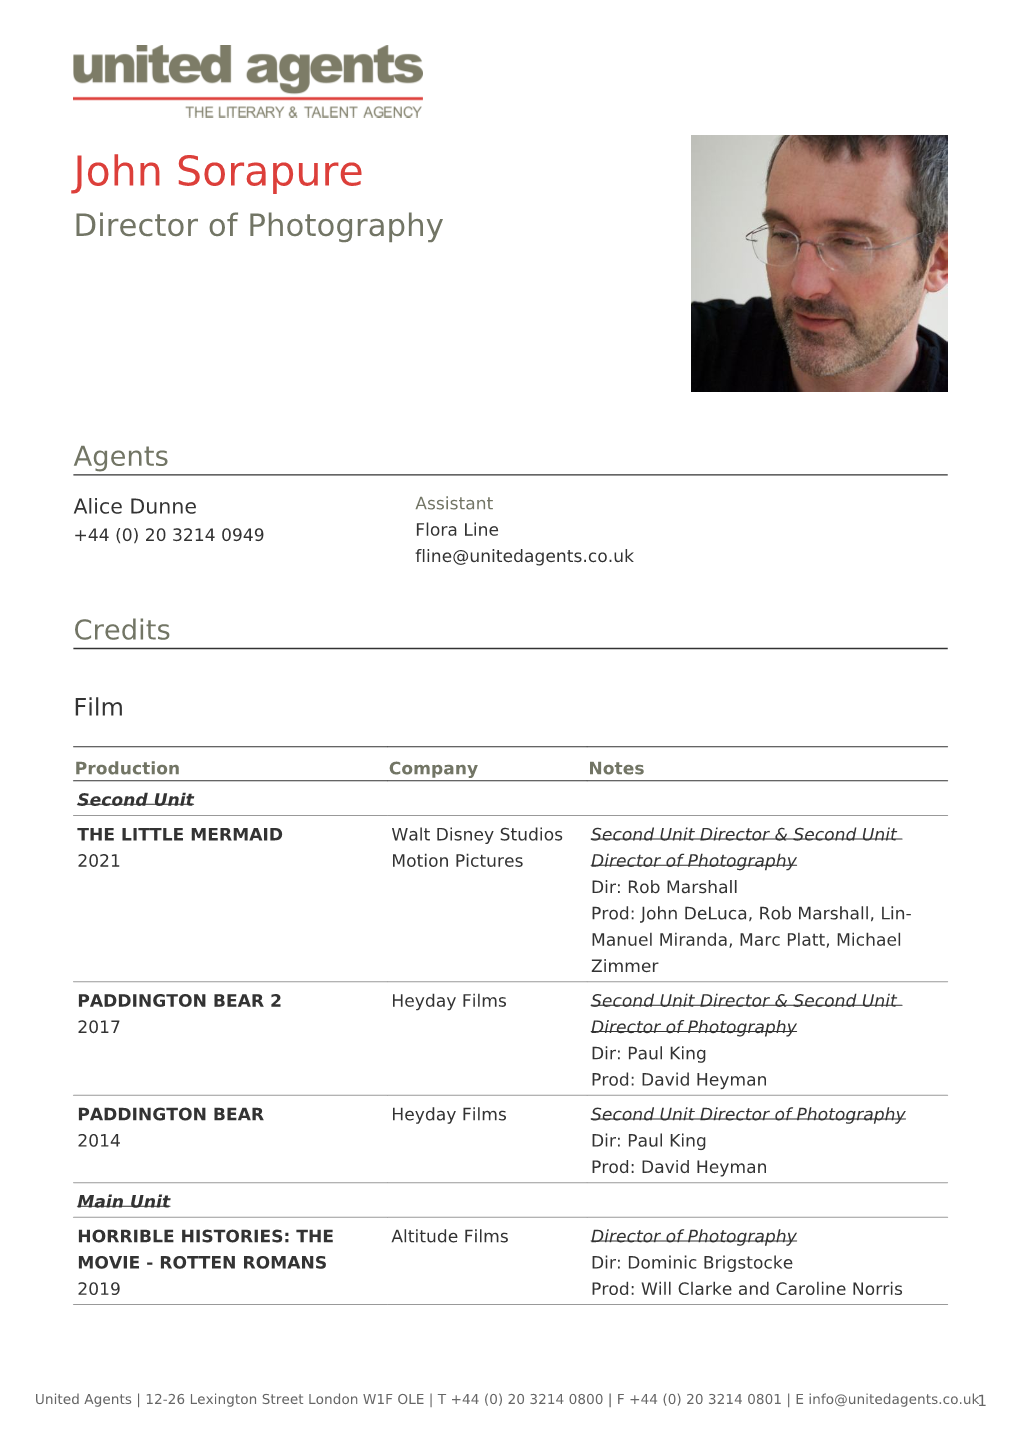 John Sorapure Director of Photography